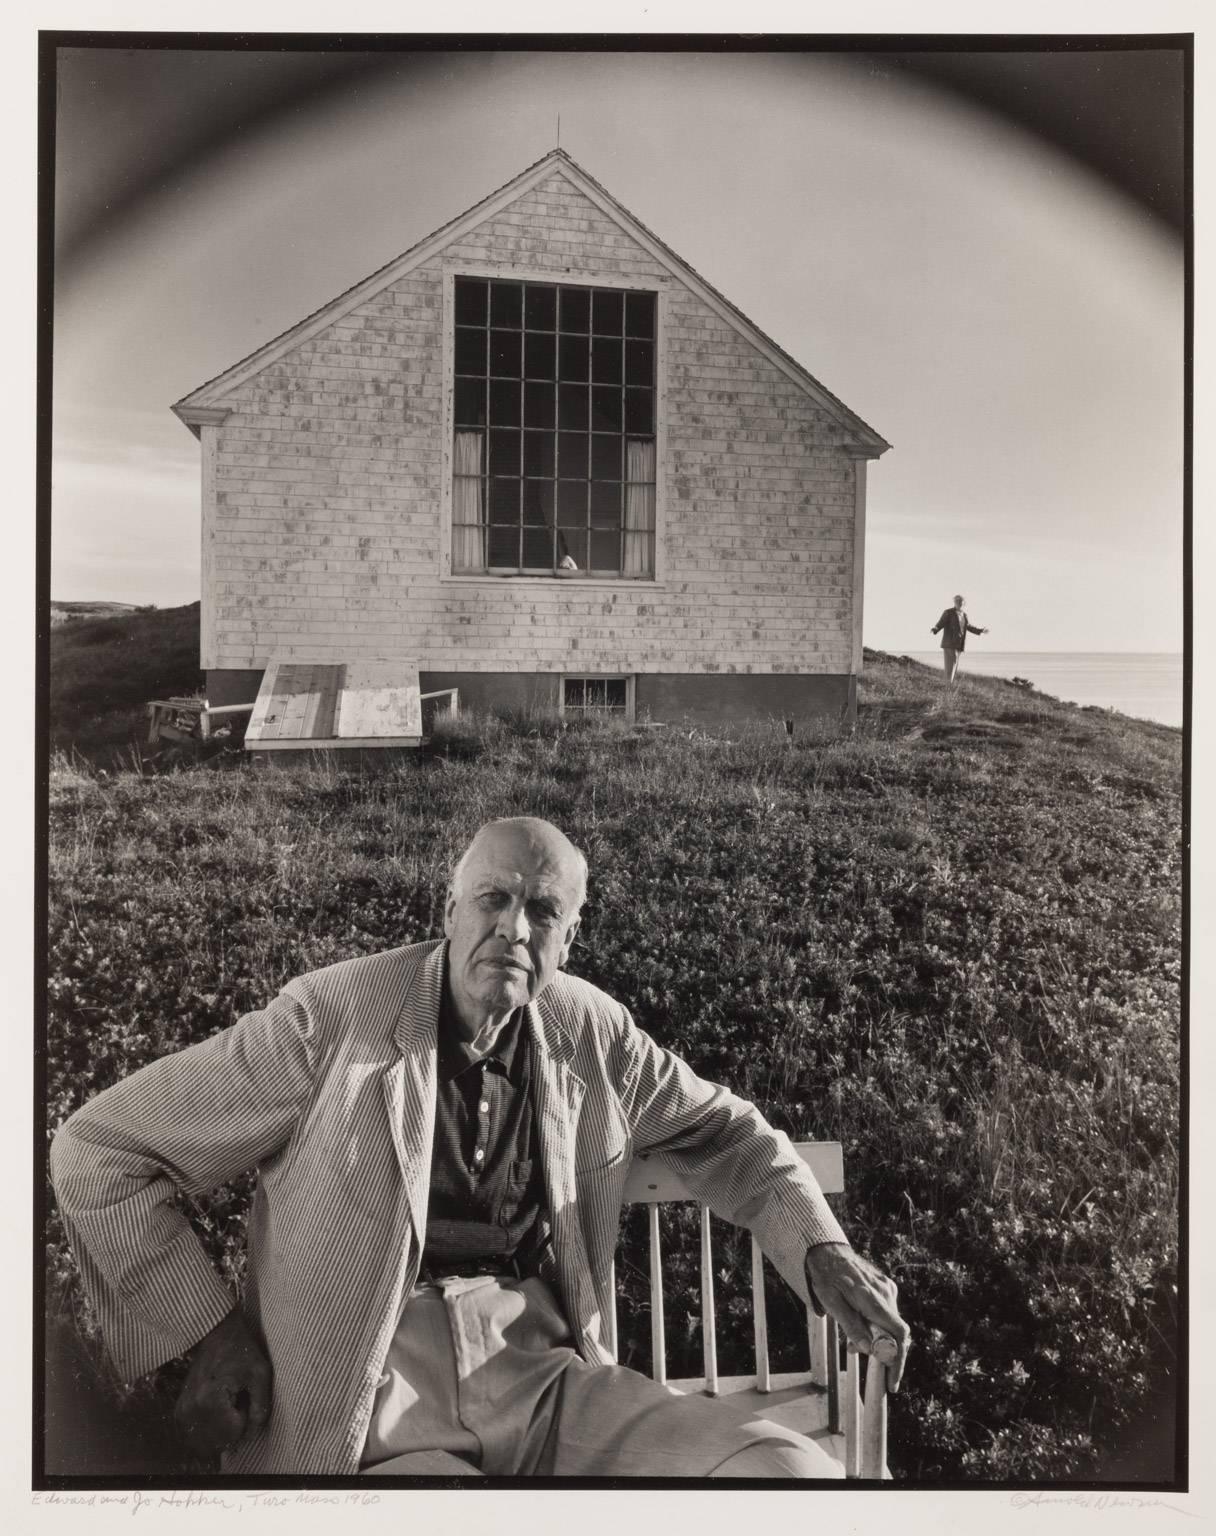 Arnold Newman Portrait Photograph - Edward Hopper, Truro, MA, 1960